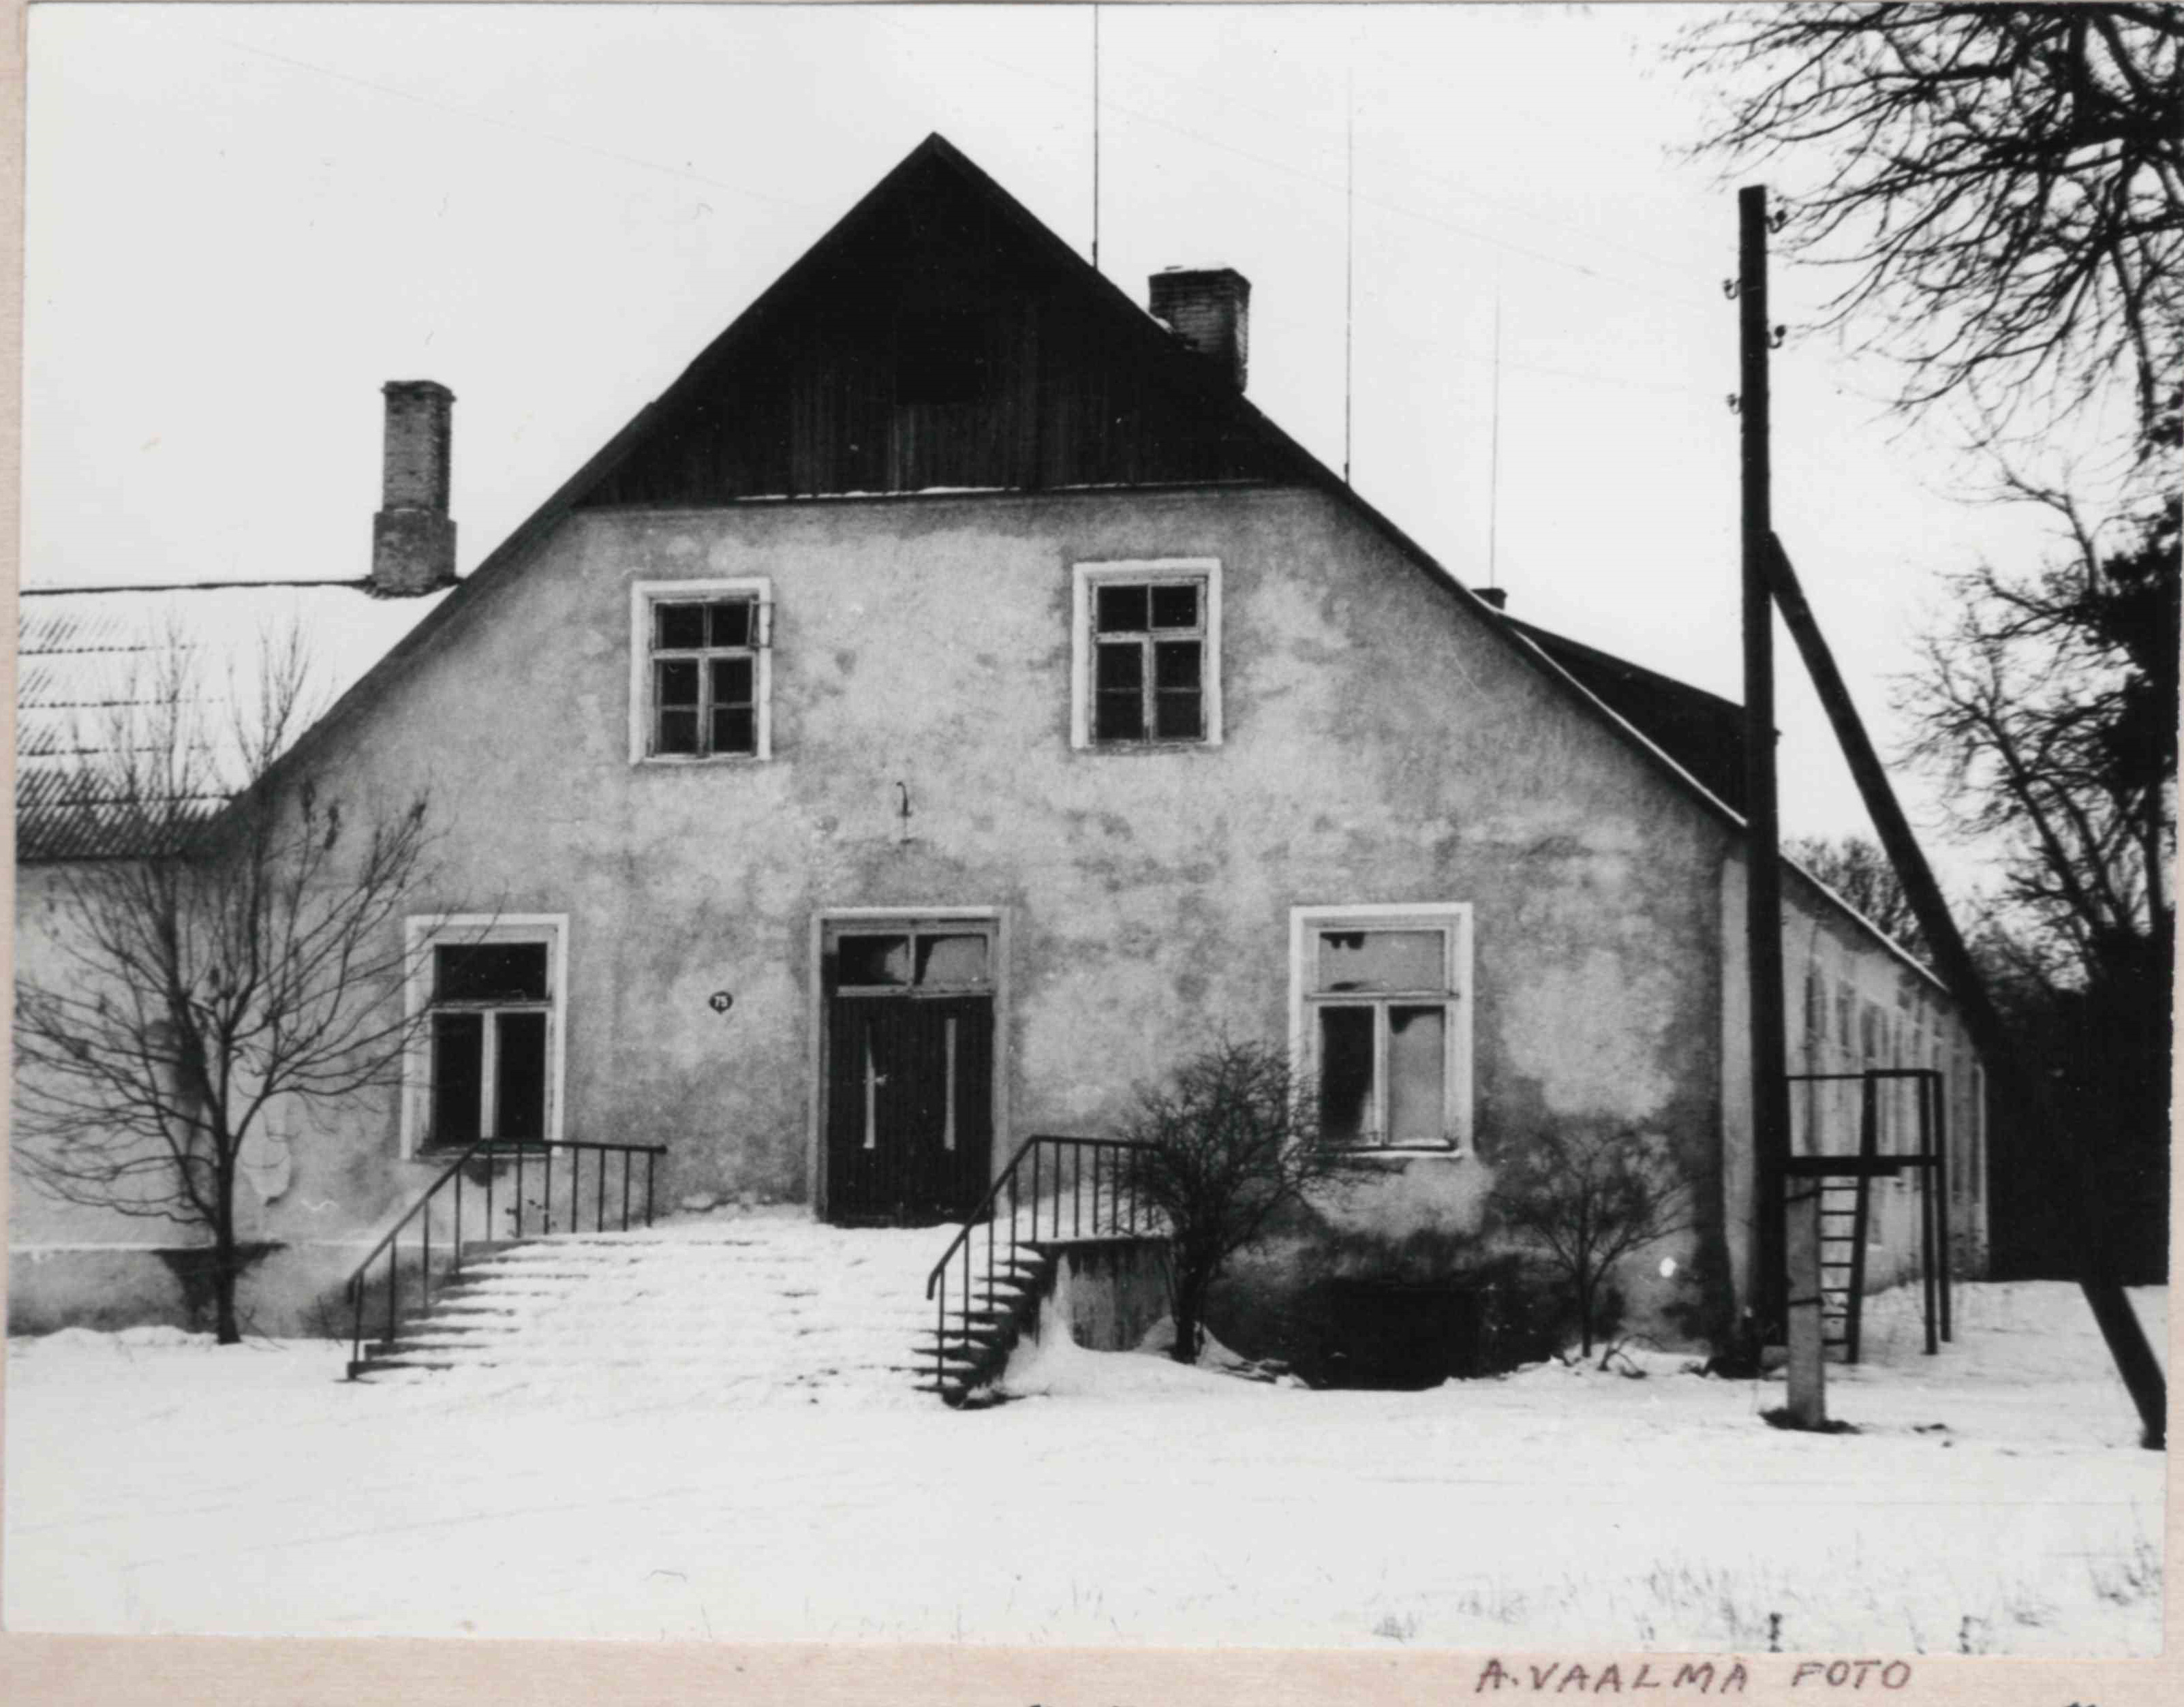 Kirimäe manor house, MTJ repair house